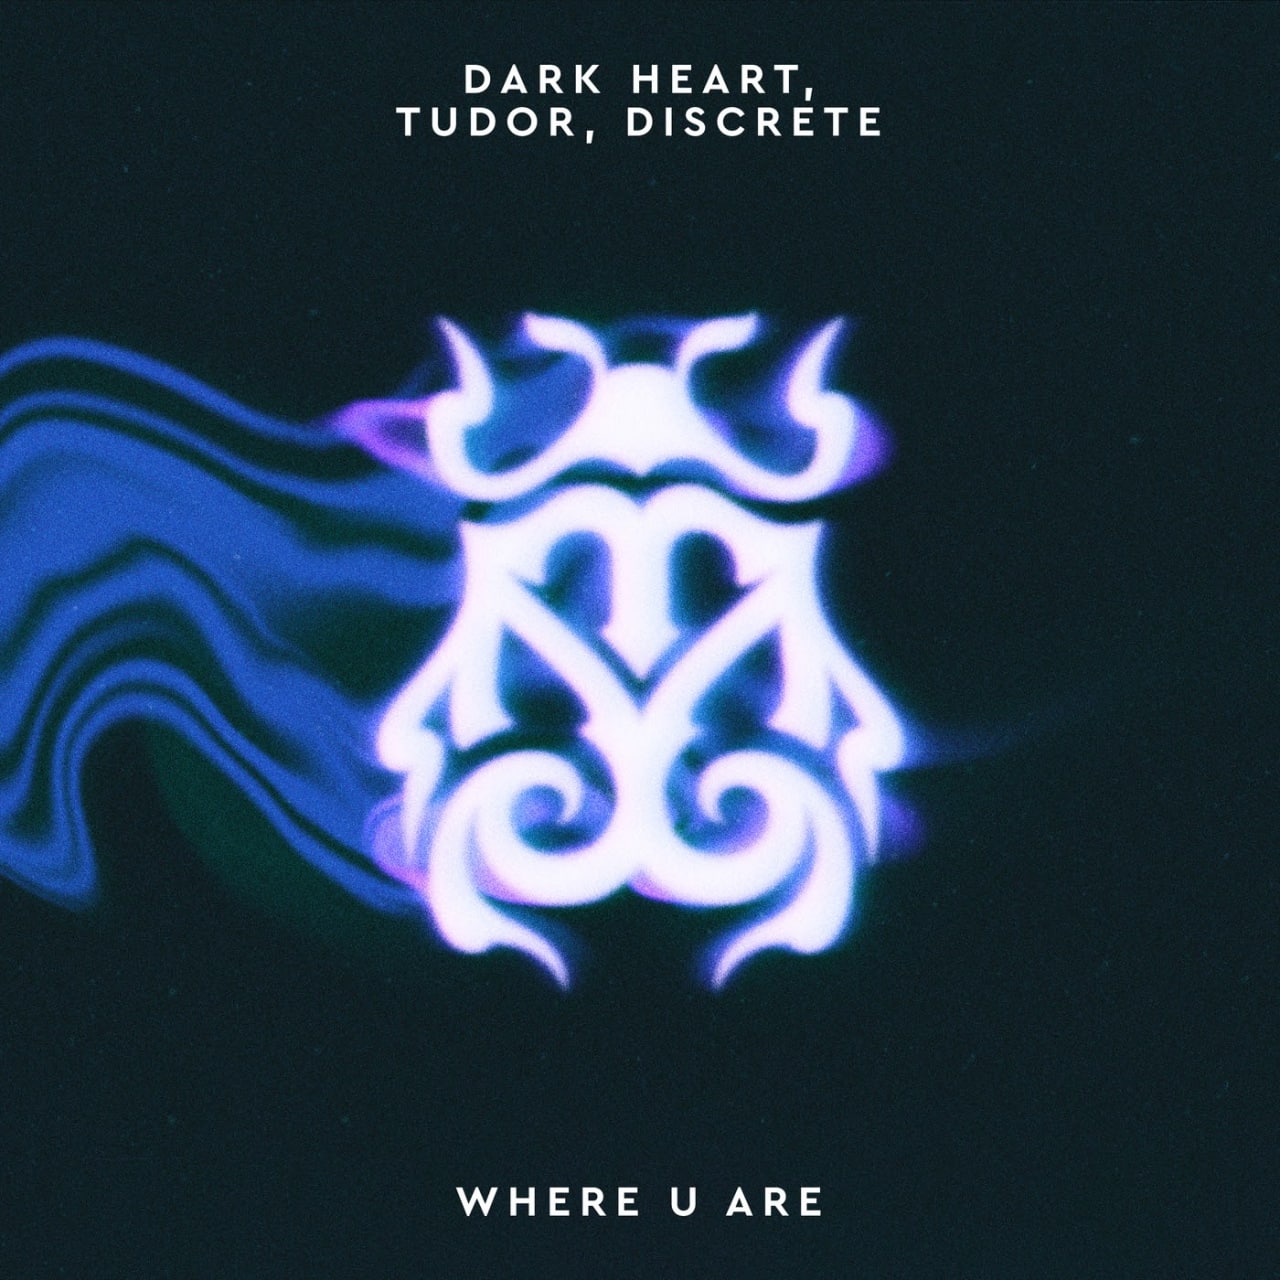 Dark Heart, Tudor, Discrete - Where U Are (extended Mix) on Revolution Radio